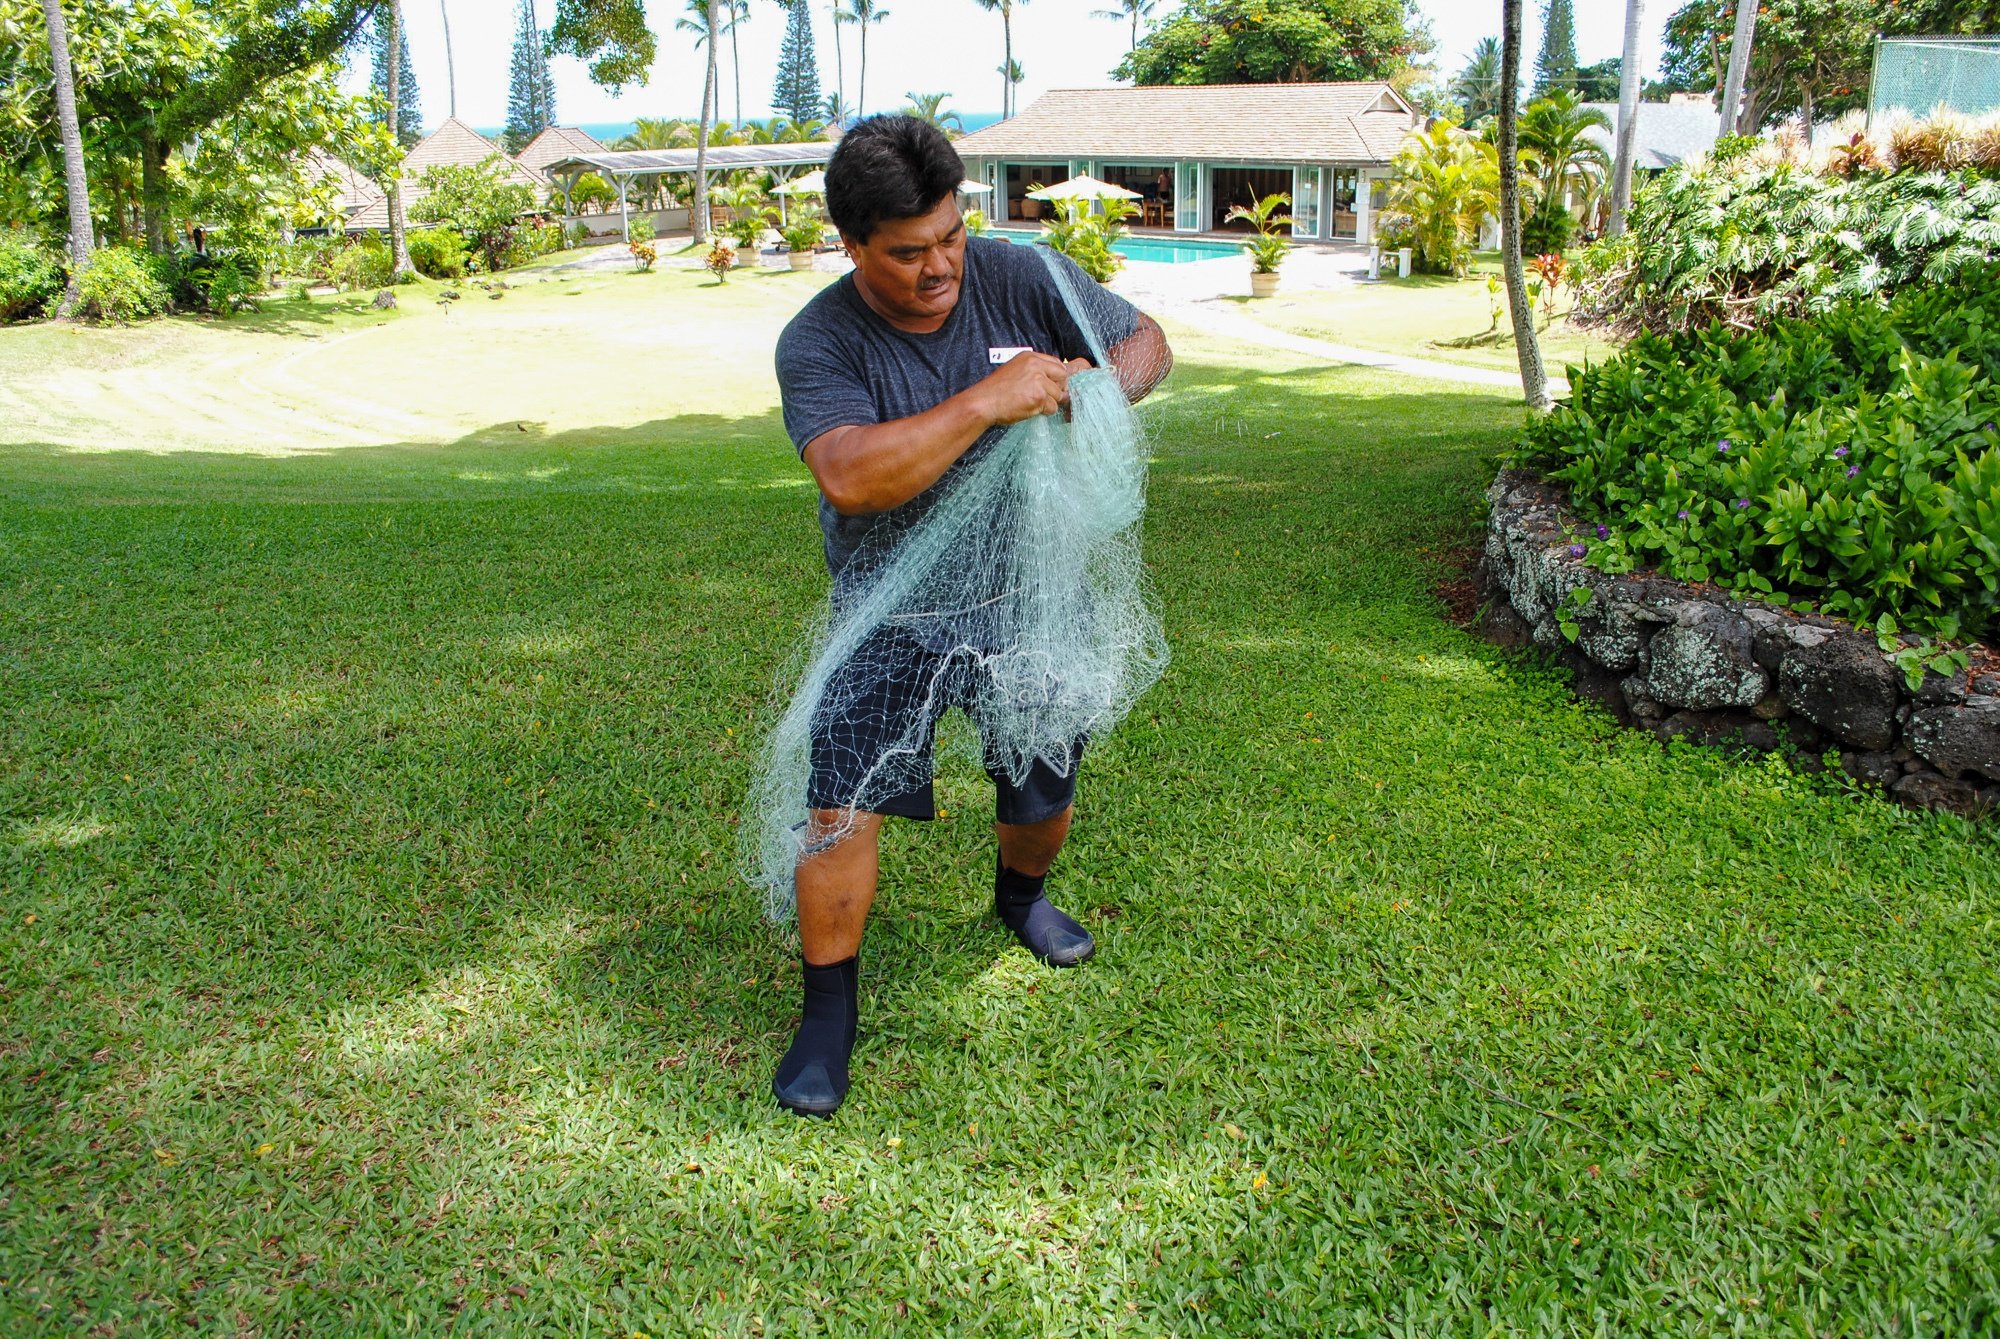 Throw net fishing lesson in Hana, Maui